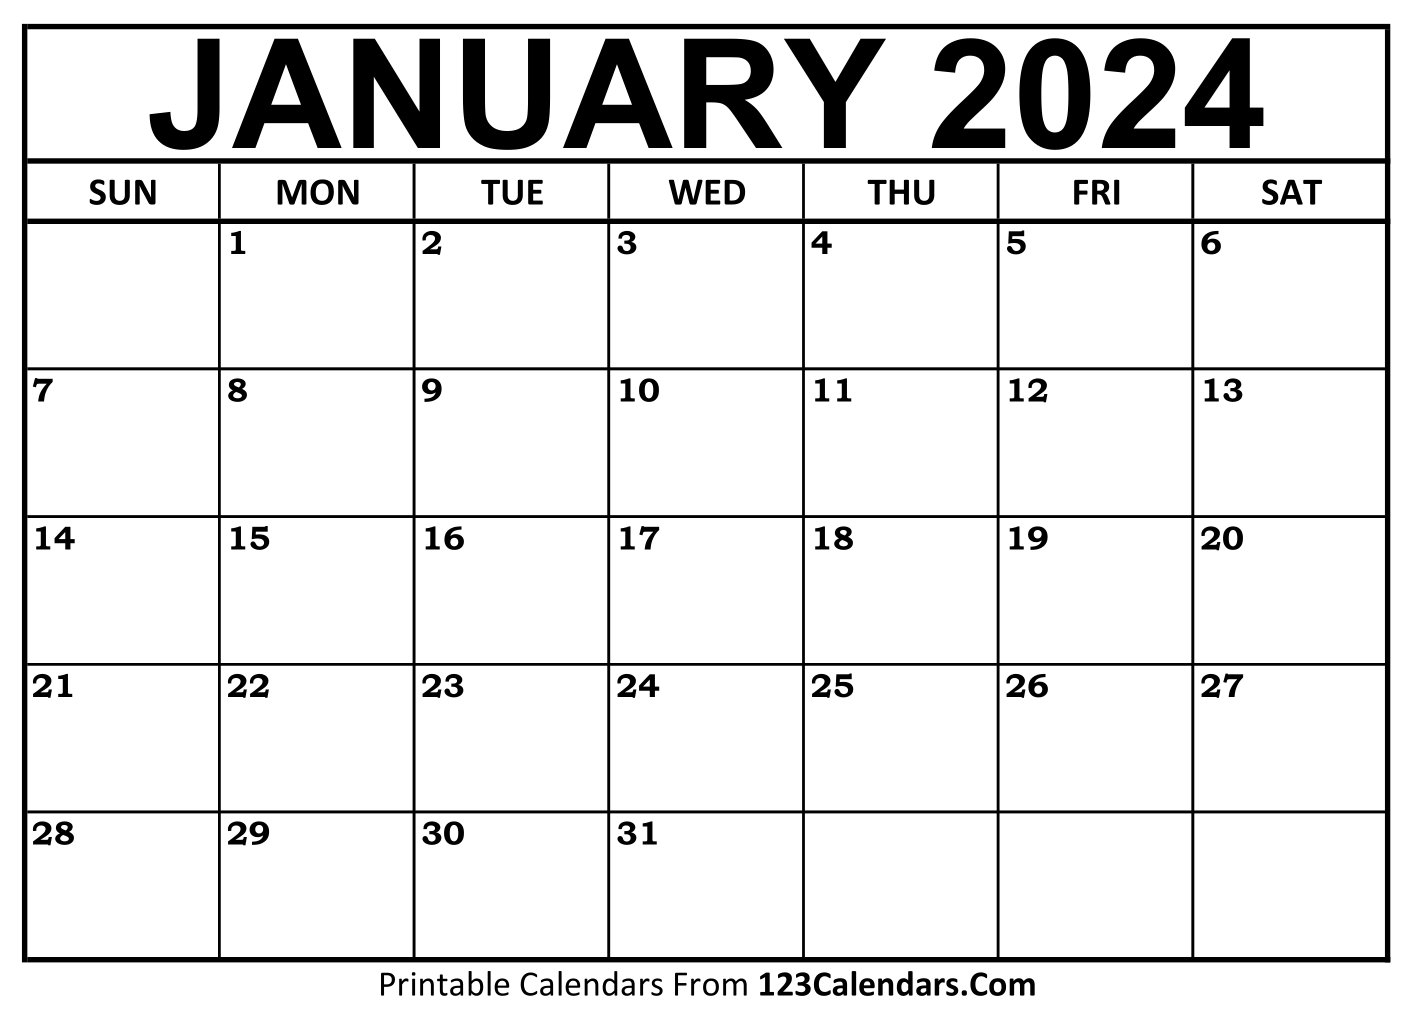 Printable January 2024 Calendar Templates - 123Calendars for January Free Printable Calendar 2024